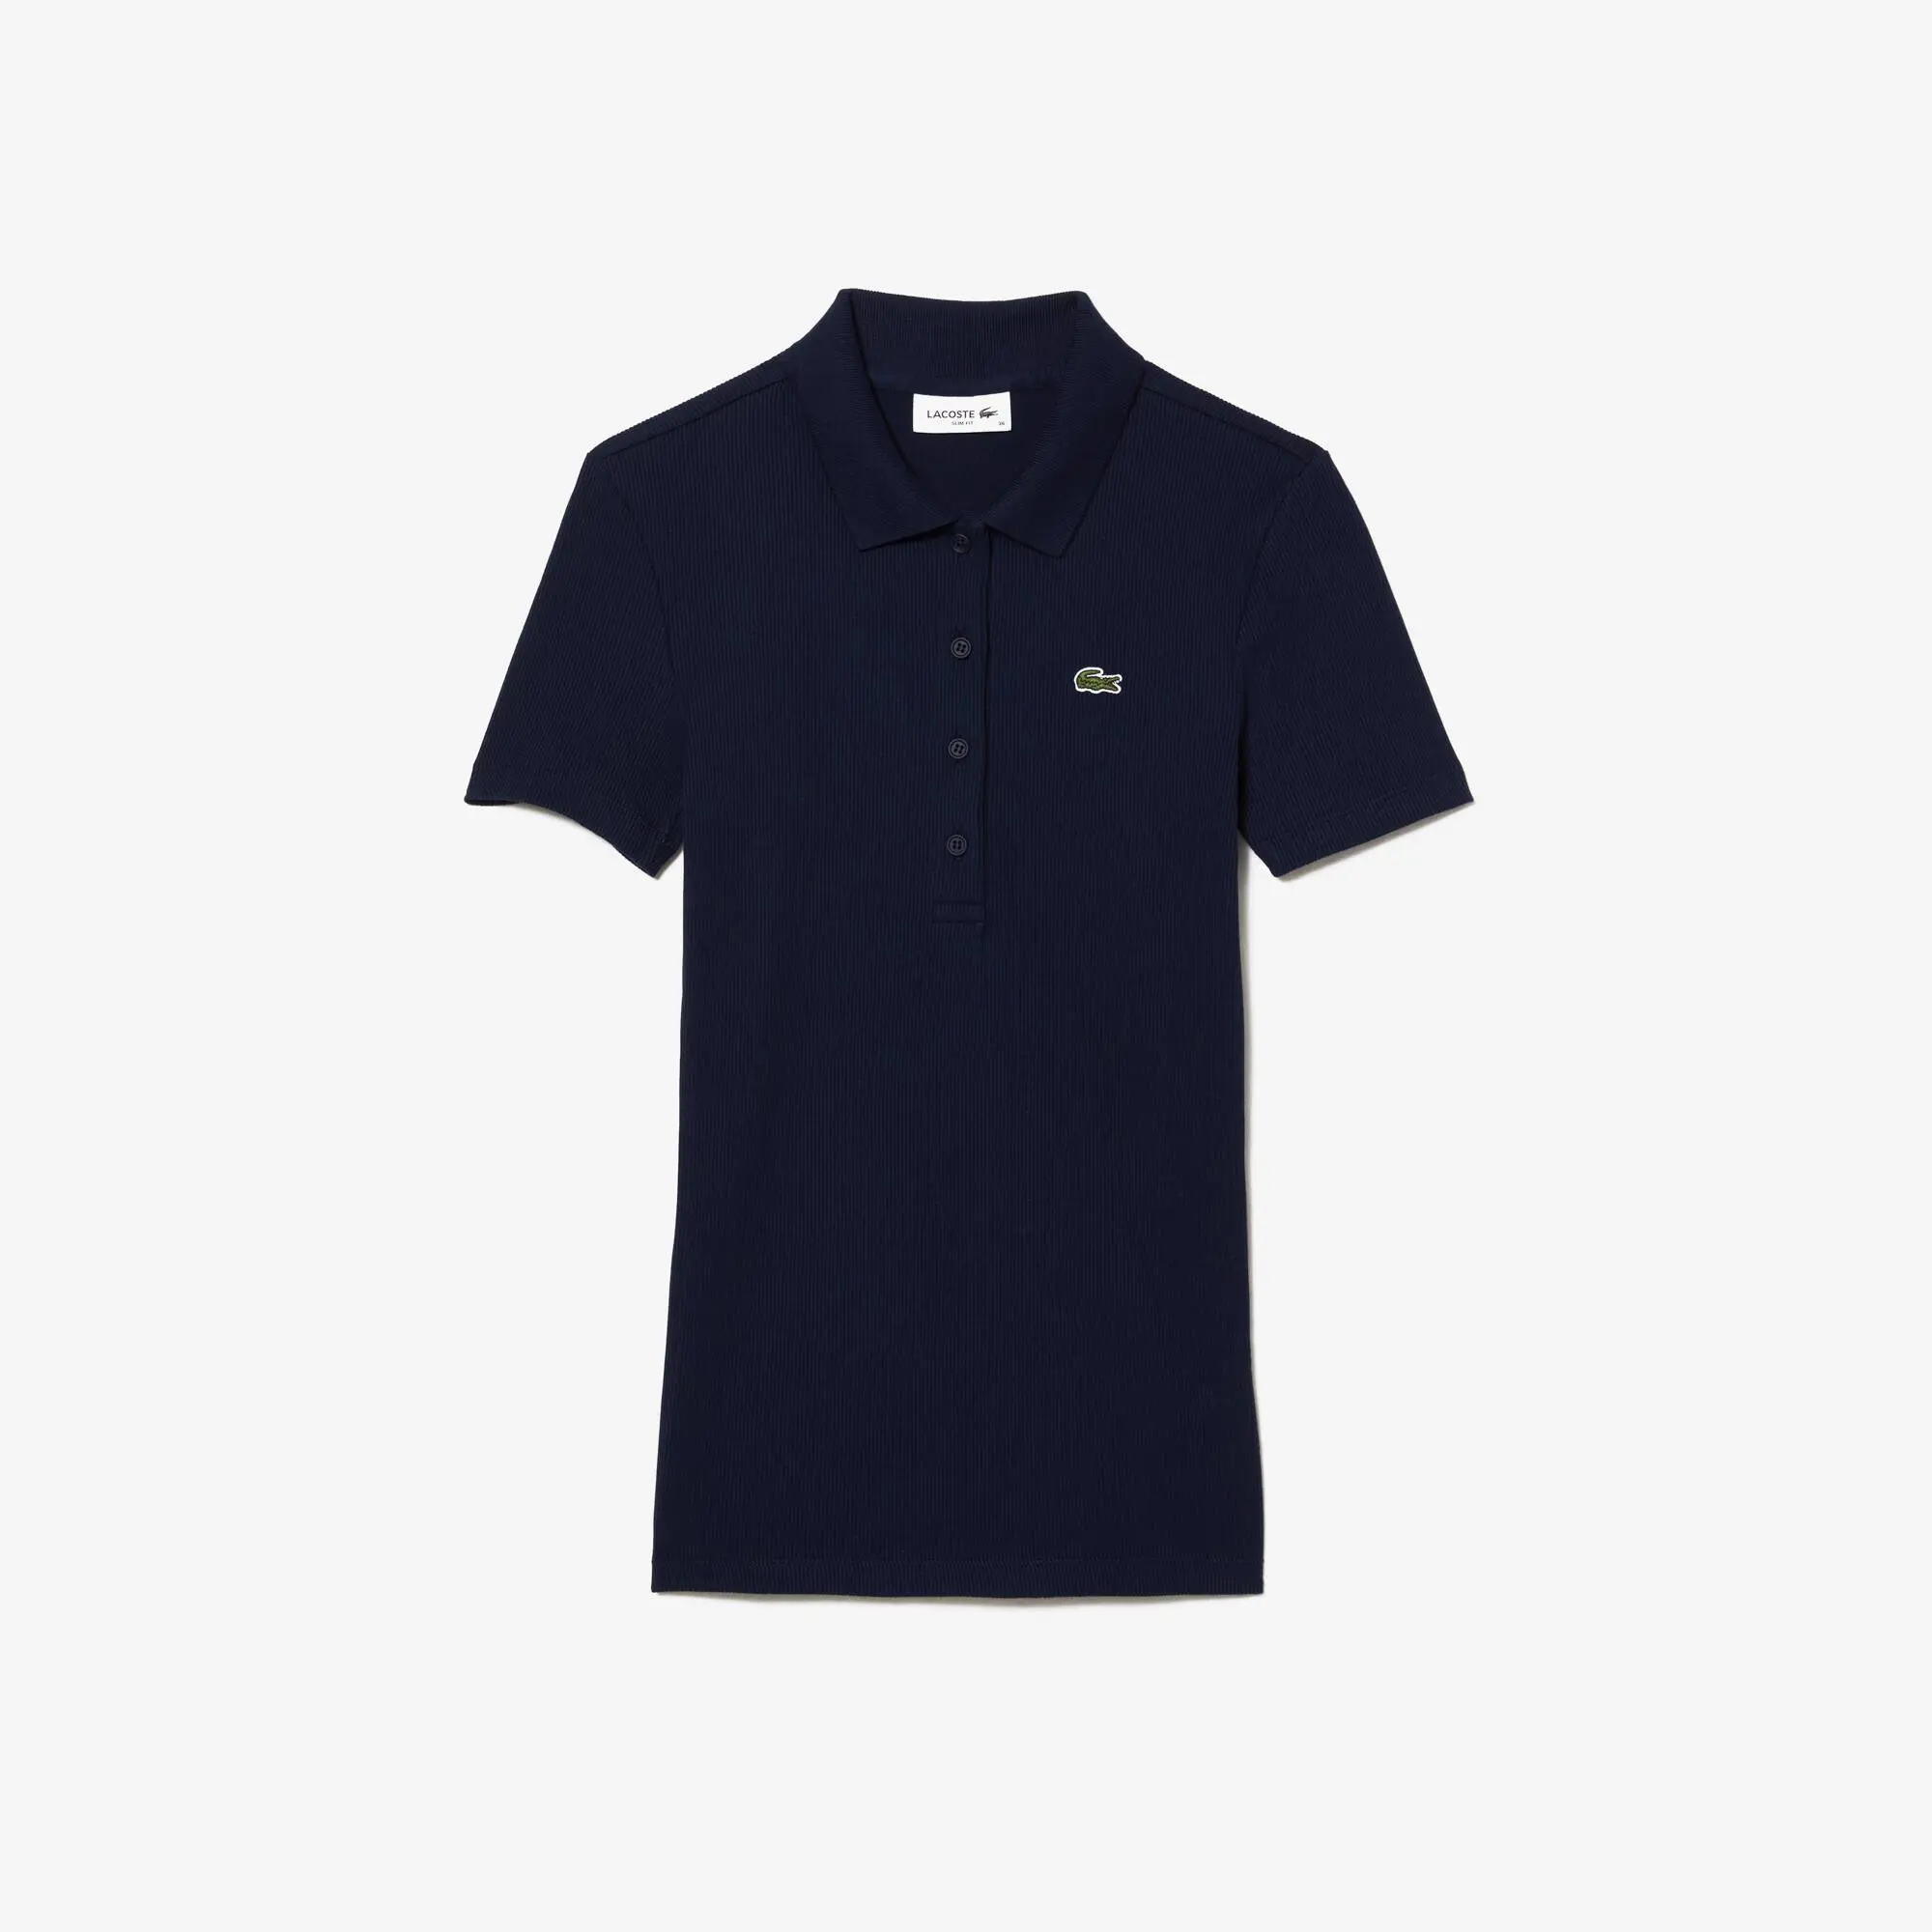 Lacoste Women’s Lacoste Slim Fit Organic Cotton Polo Shirt. 2